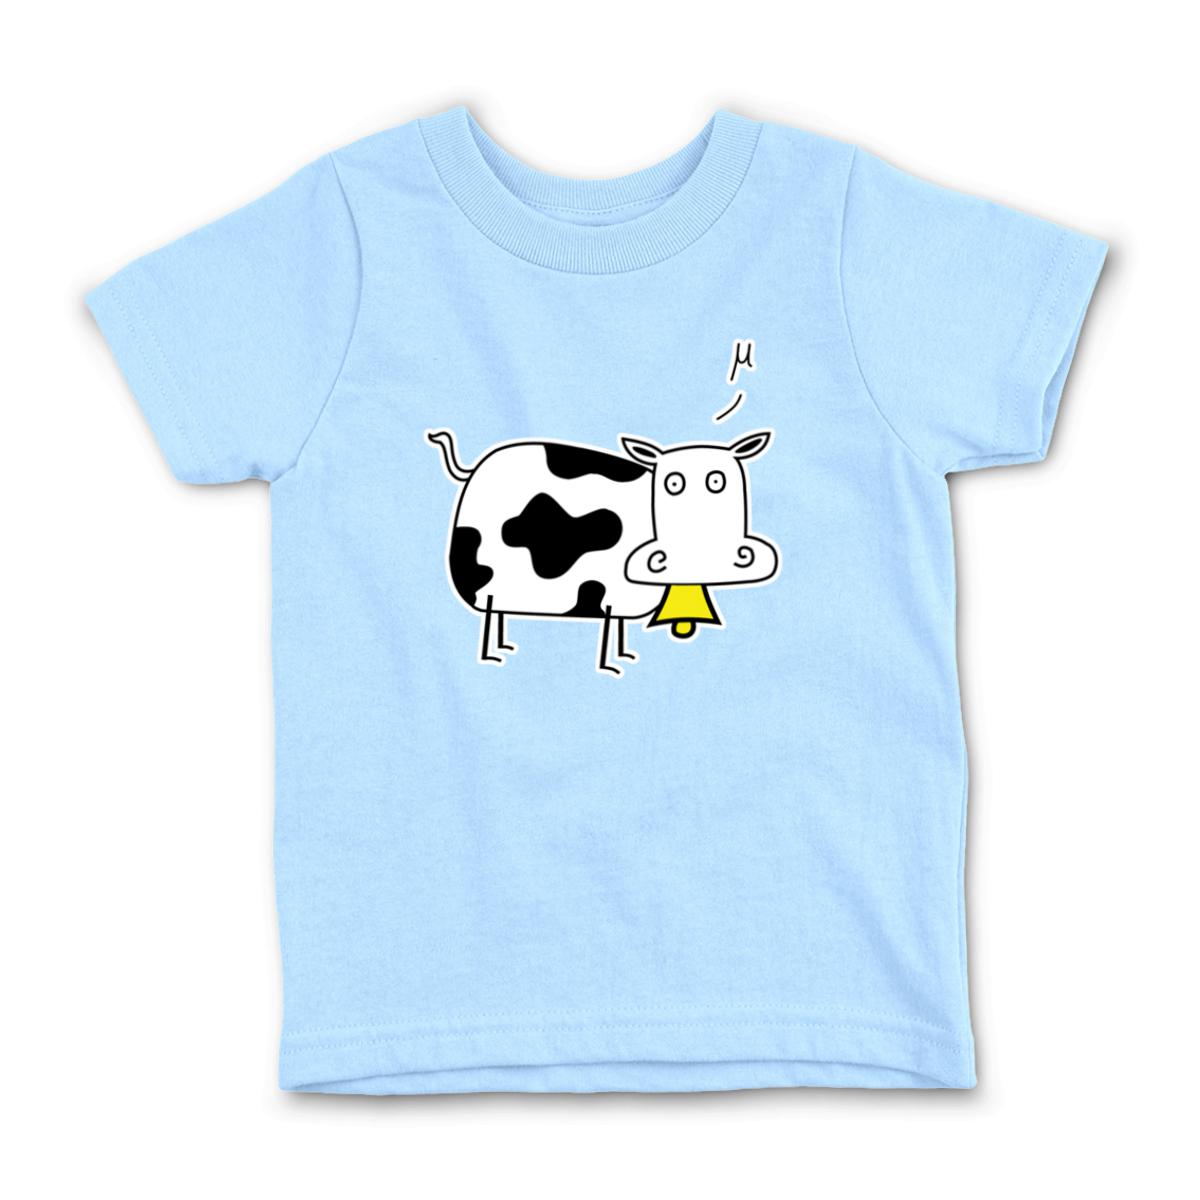 Mu Cow Kid's Tee Large light-blue